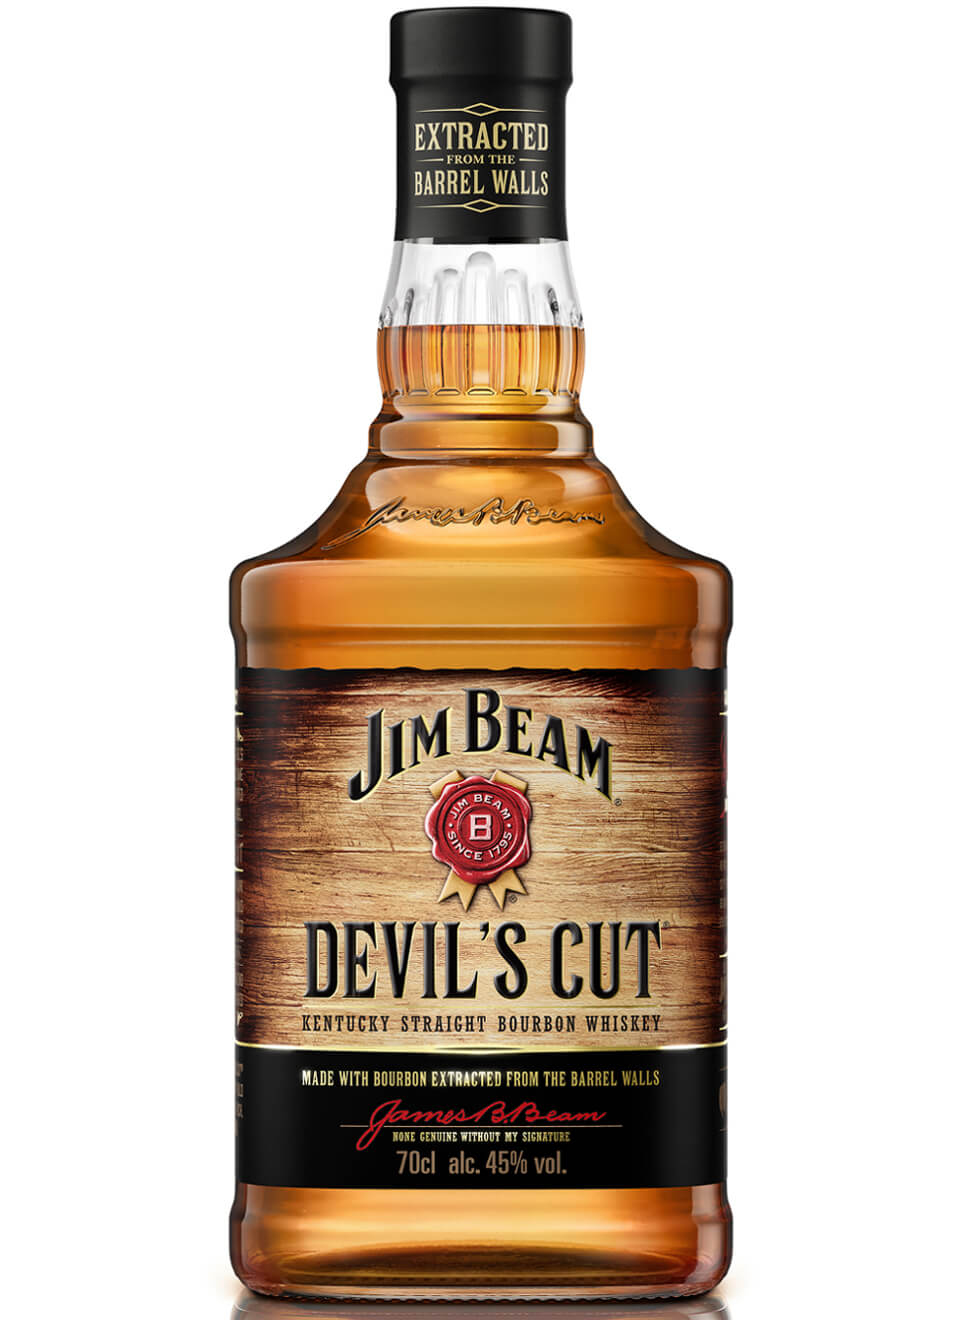 Jim Beam Devils Cut Kentucky Straight Bourbon Whiskey 0,7 L